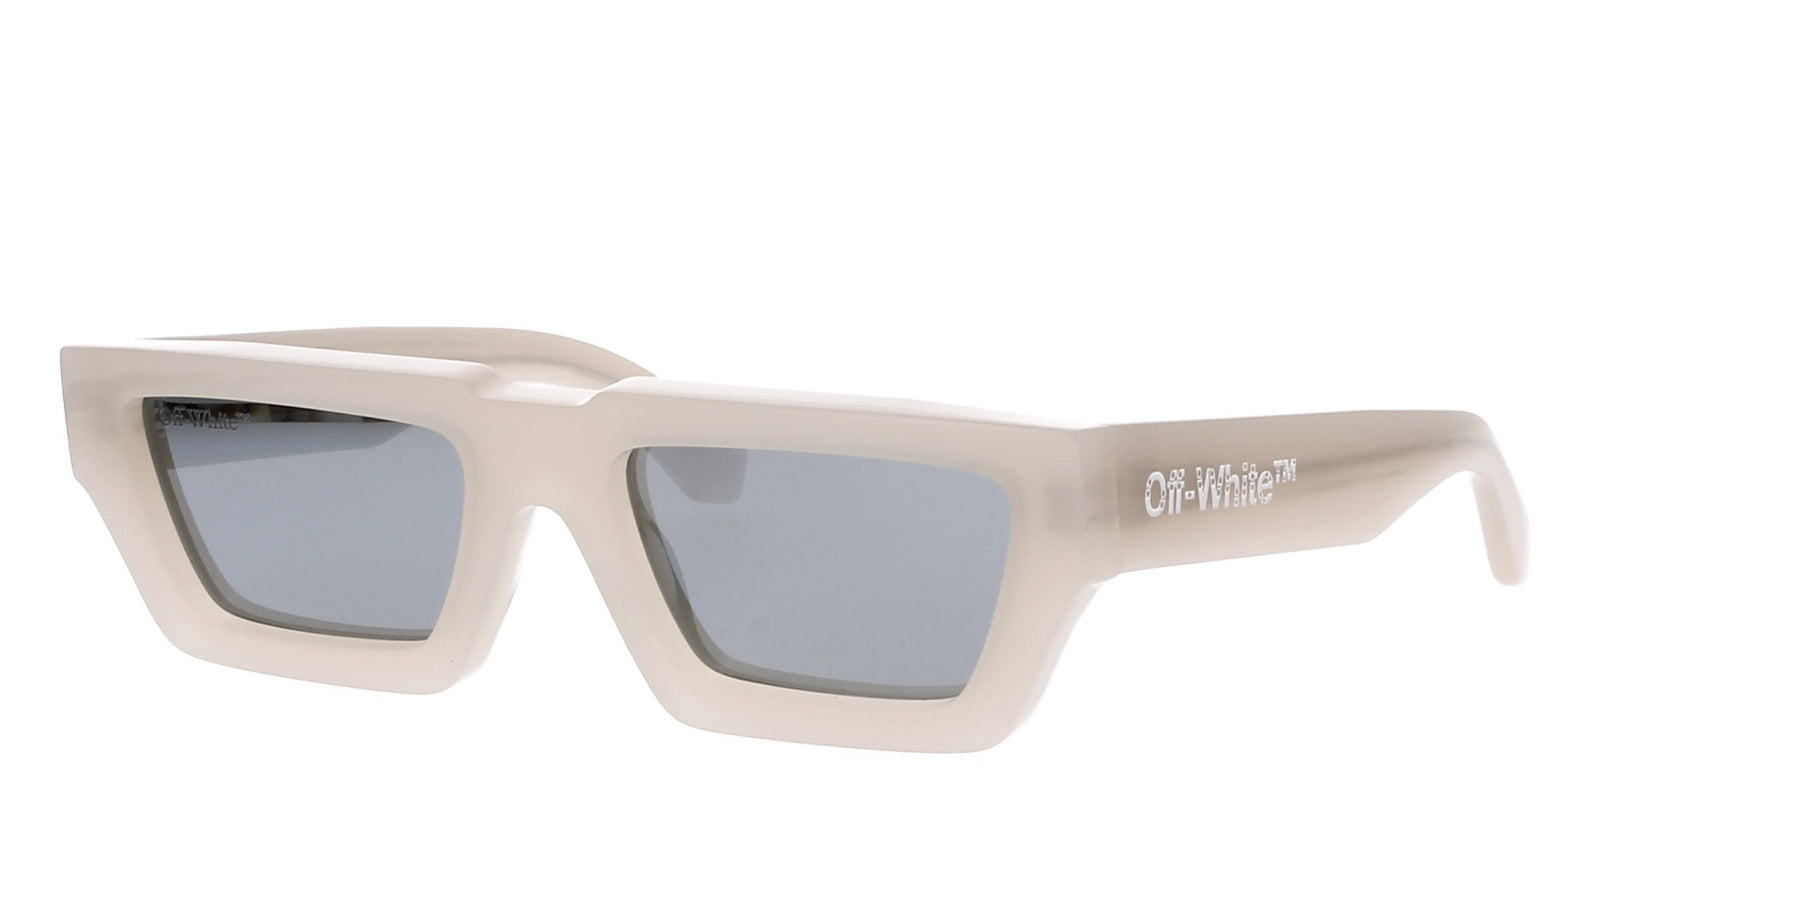 Off White™ Blue Manchester Sunglasses